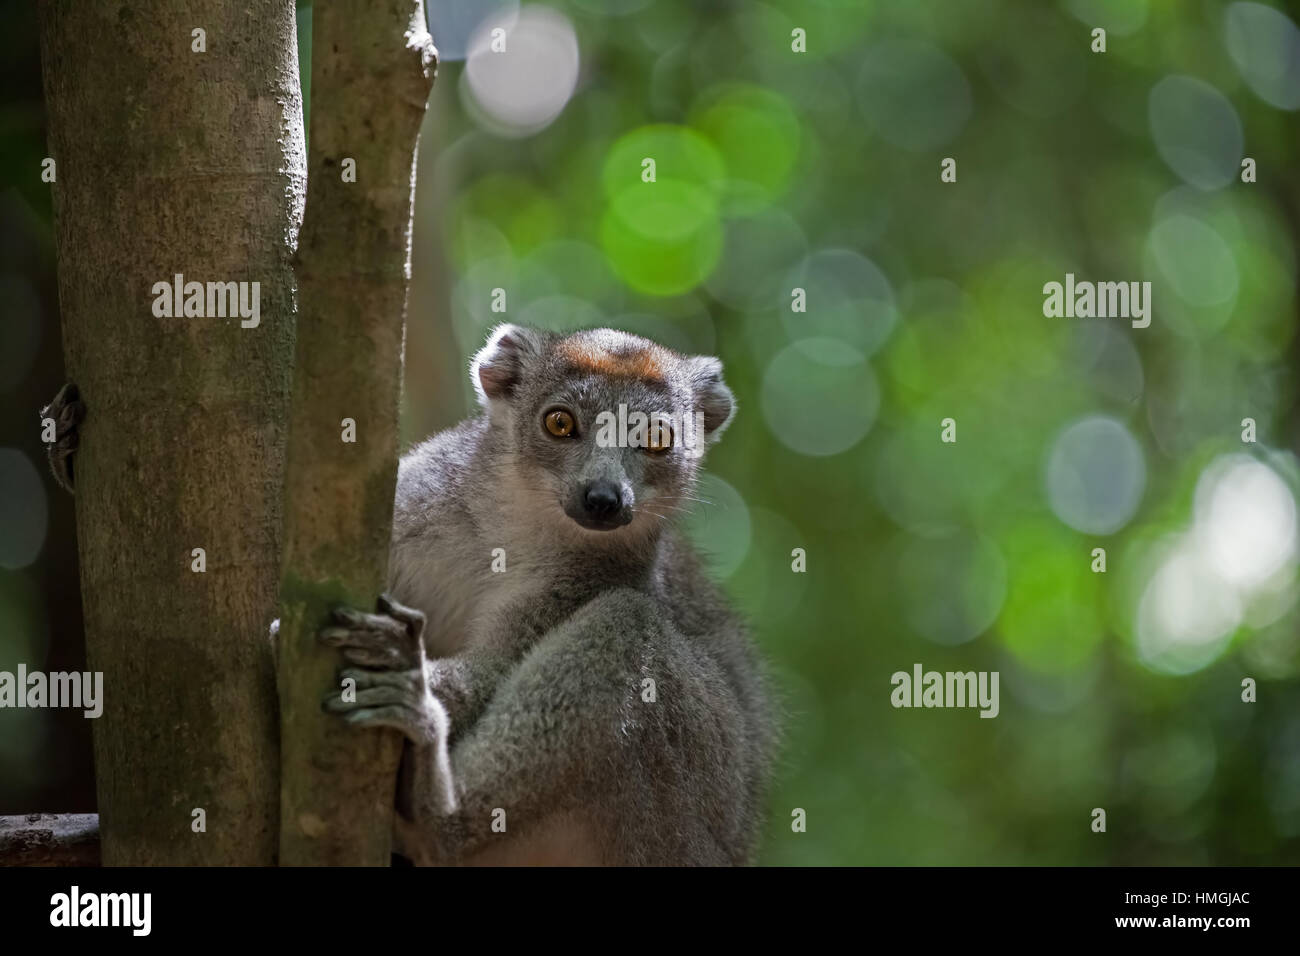 Crowned lemur Stock Photo